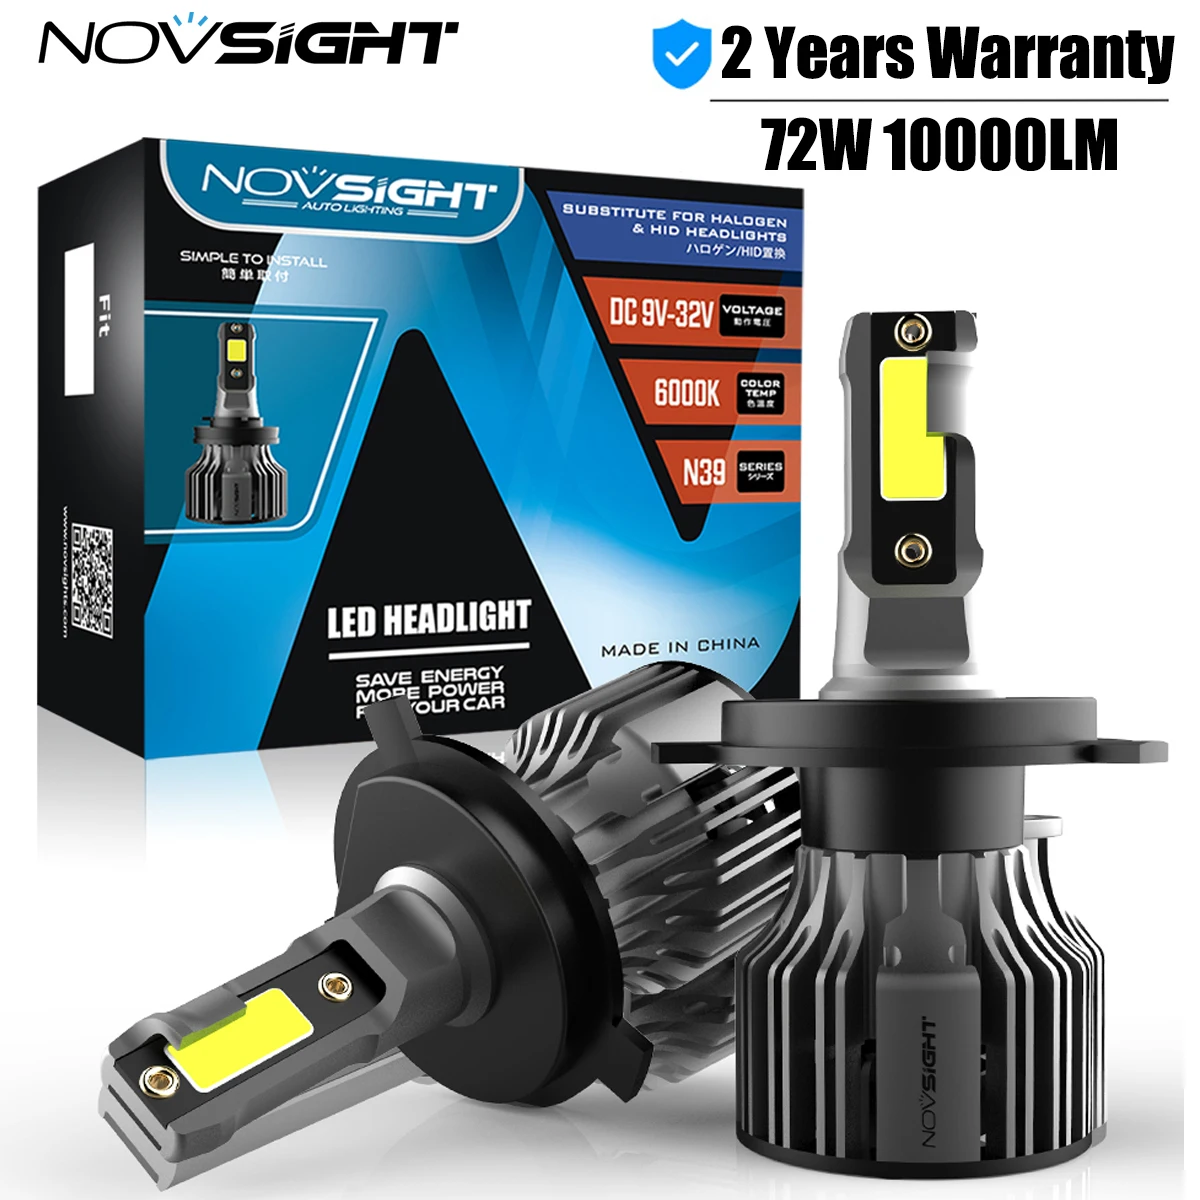 

NOVSIGHT Car Headlight Bulbs Led H11 H7 H8 H9 H1 H3 H4 9005 9006 9007 9003 H13 6000K 72W 10000LM Auto Accessories Car Lamps